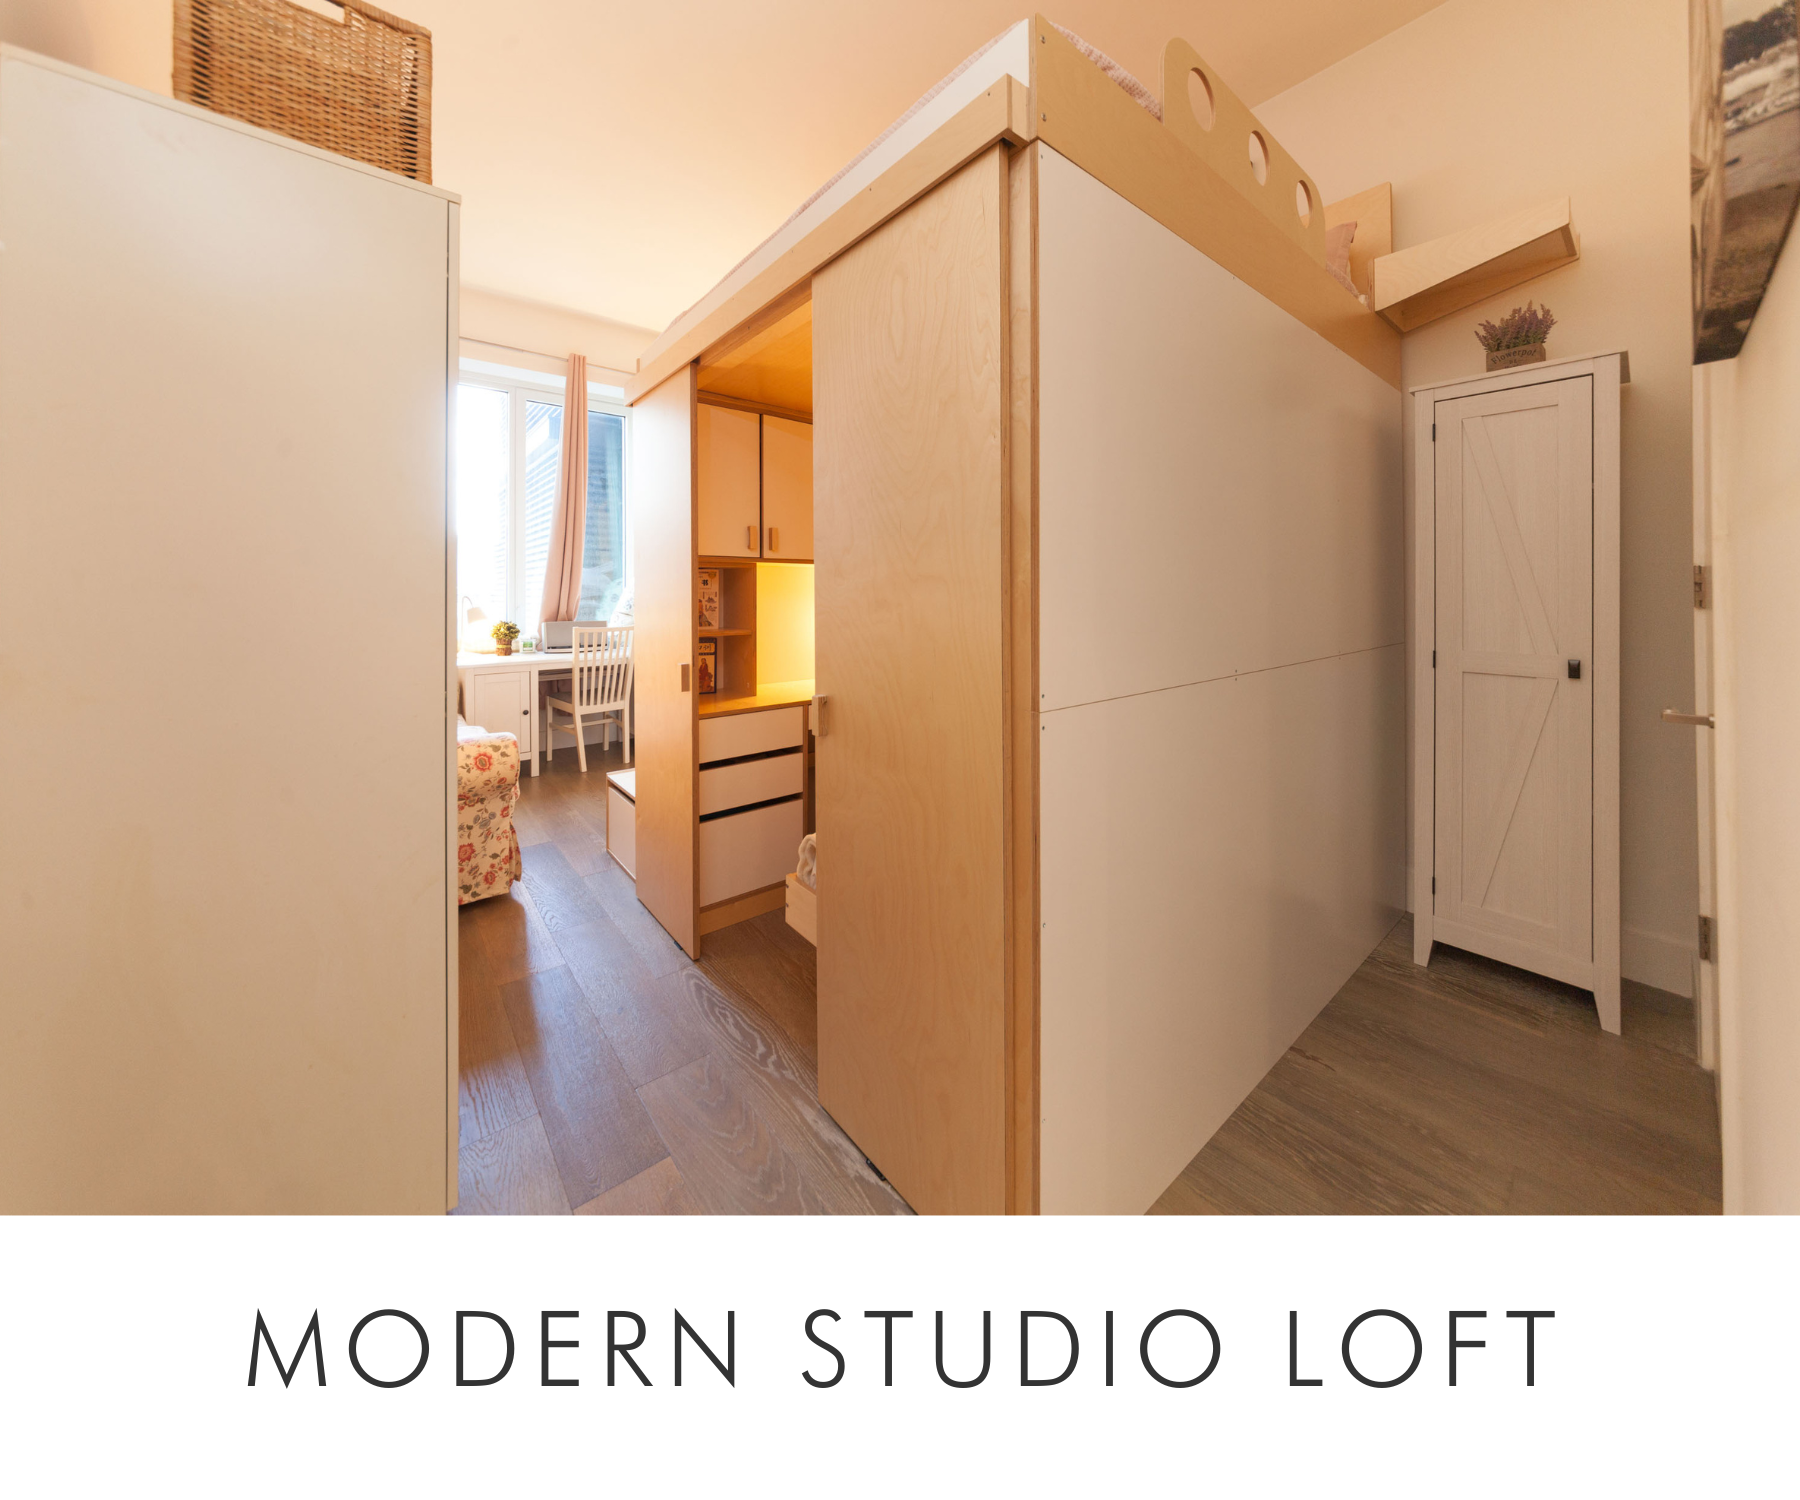 modern studio loft - king size loft bed with desk underneath in plywood birch white finish